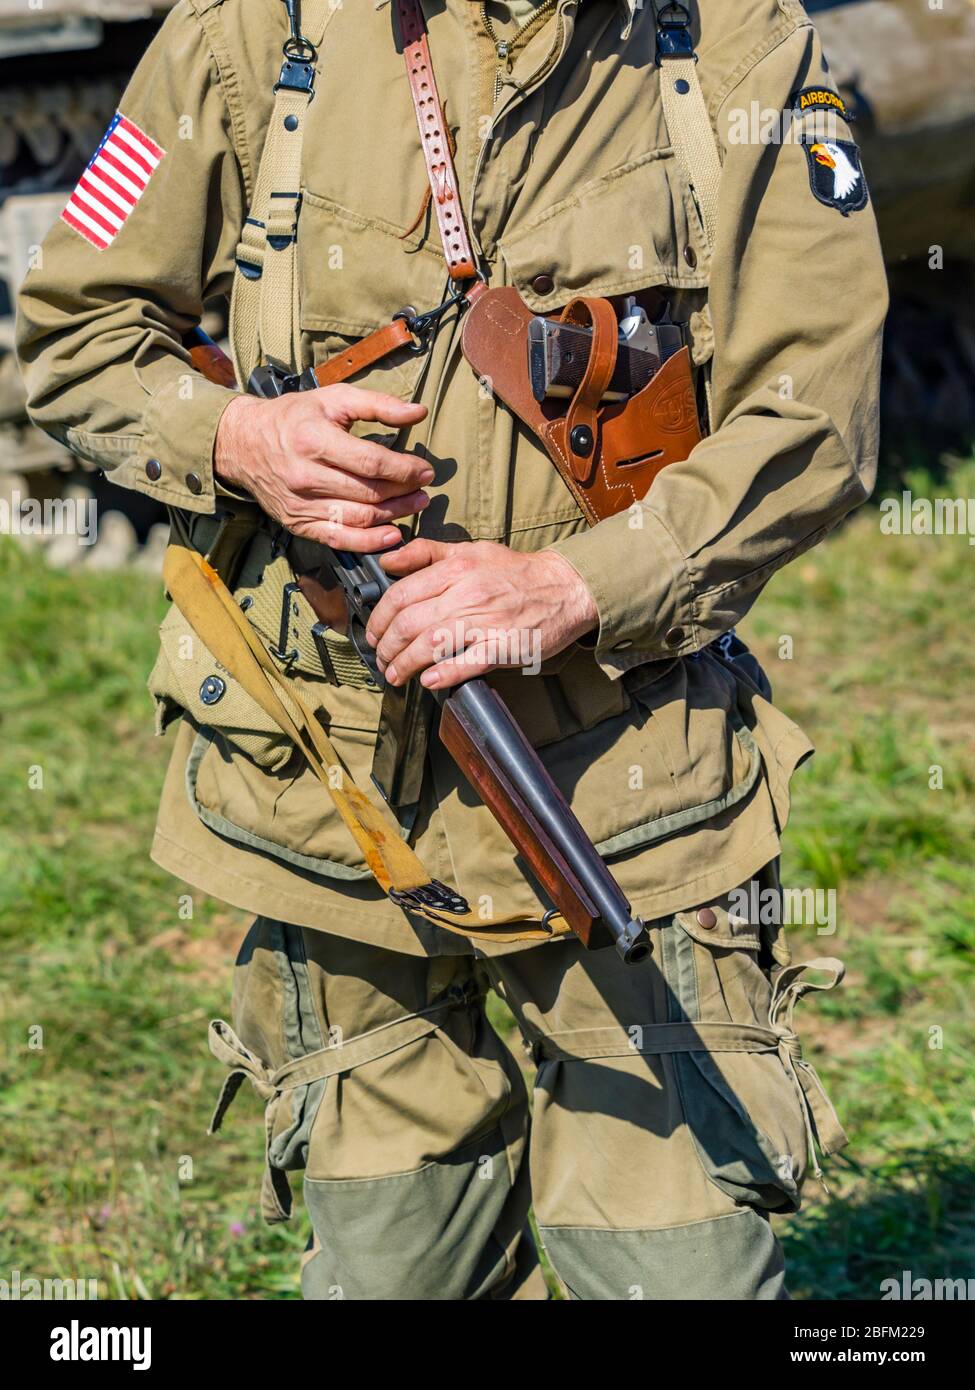 Reviving history of Slovenia Pivka museum of military history representing WW2 USA American army Thompson sub-machine gun Stock Photo